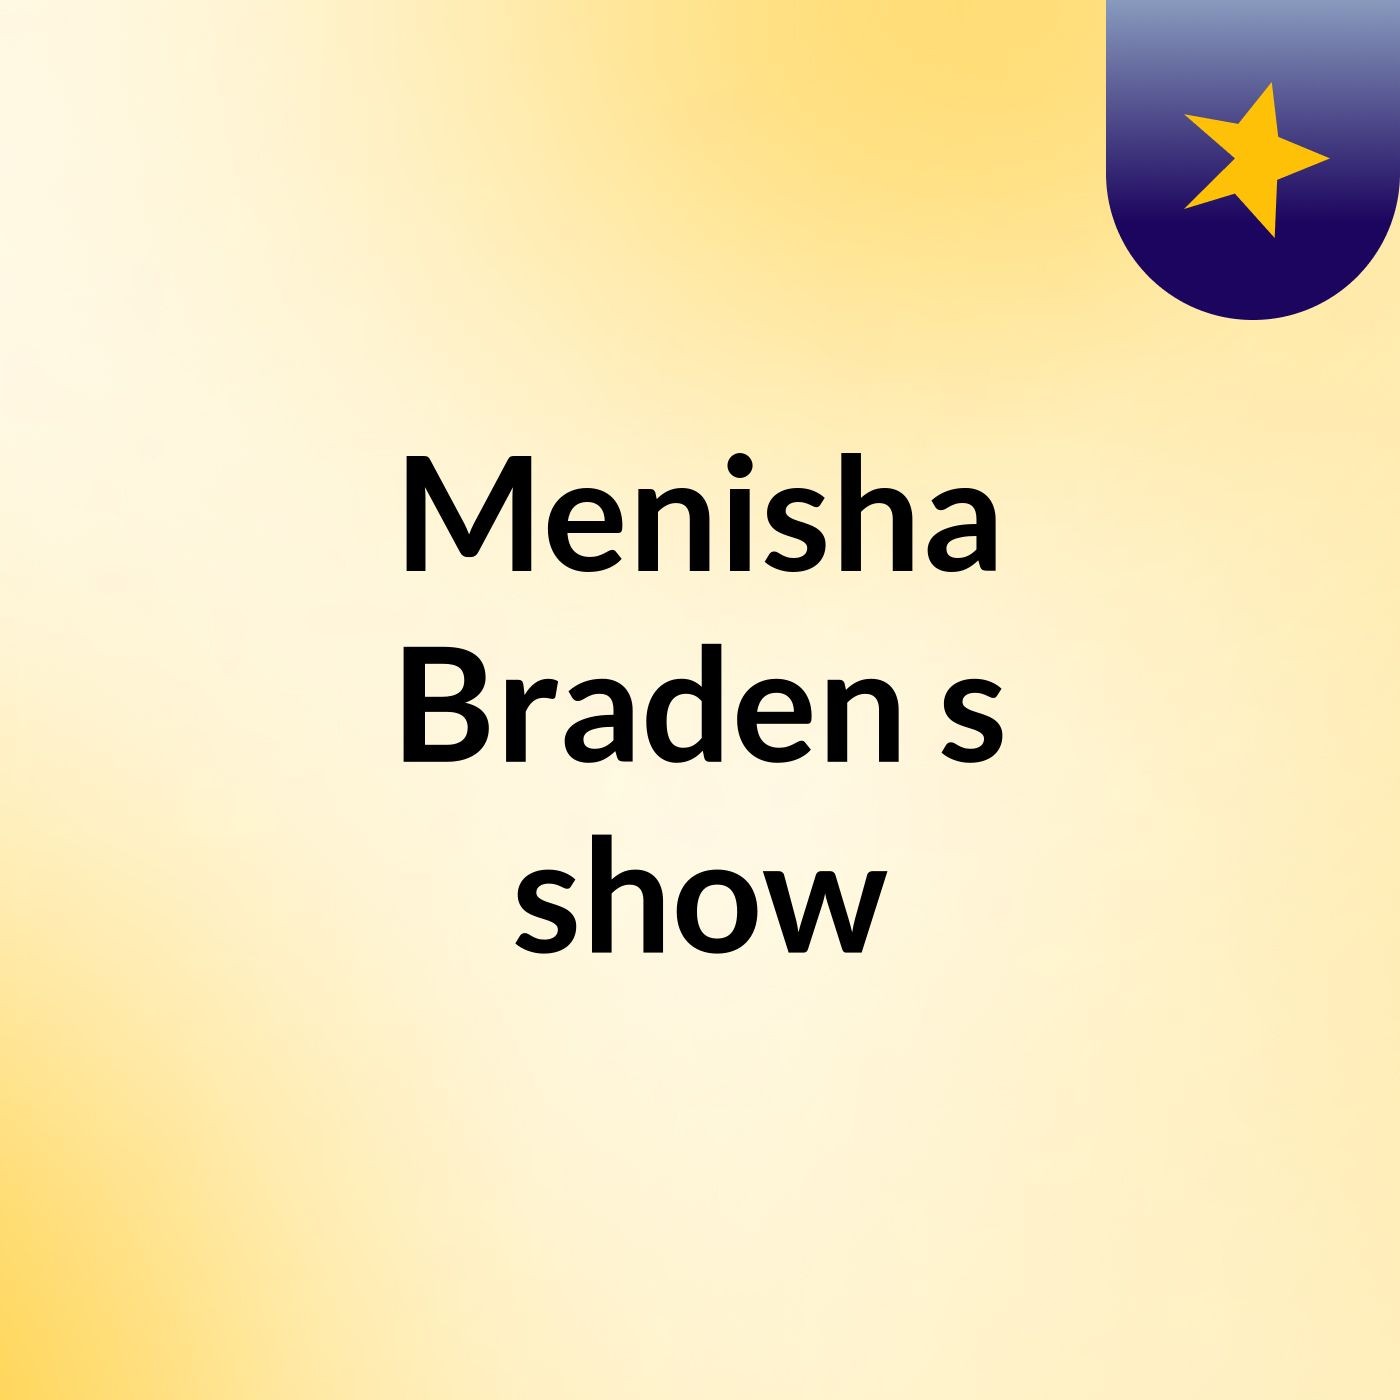 Episode 2 - Menisha Braden's show